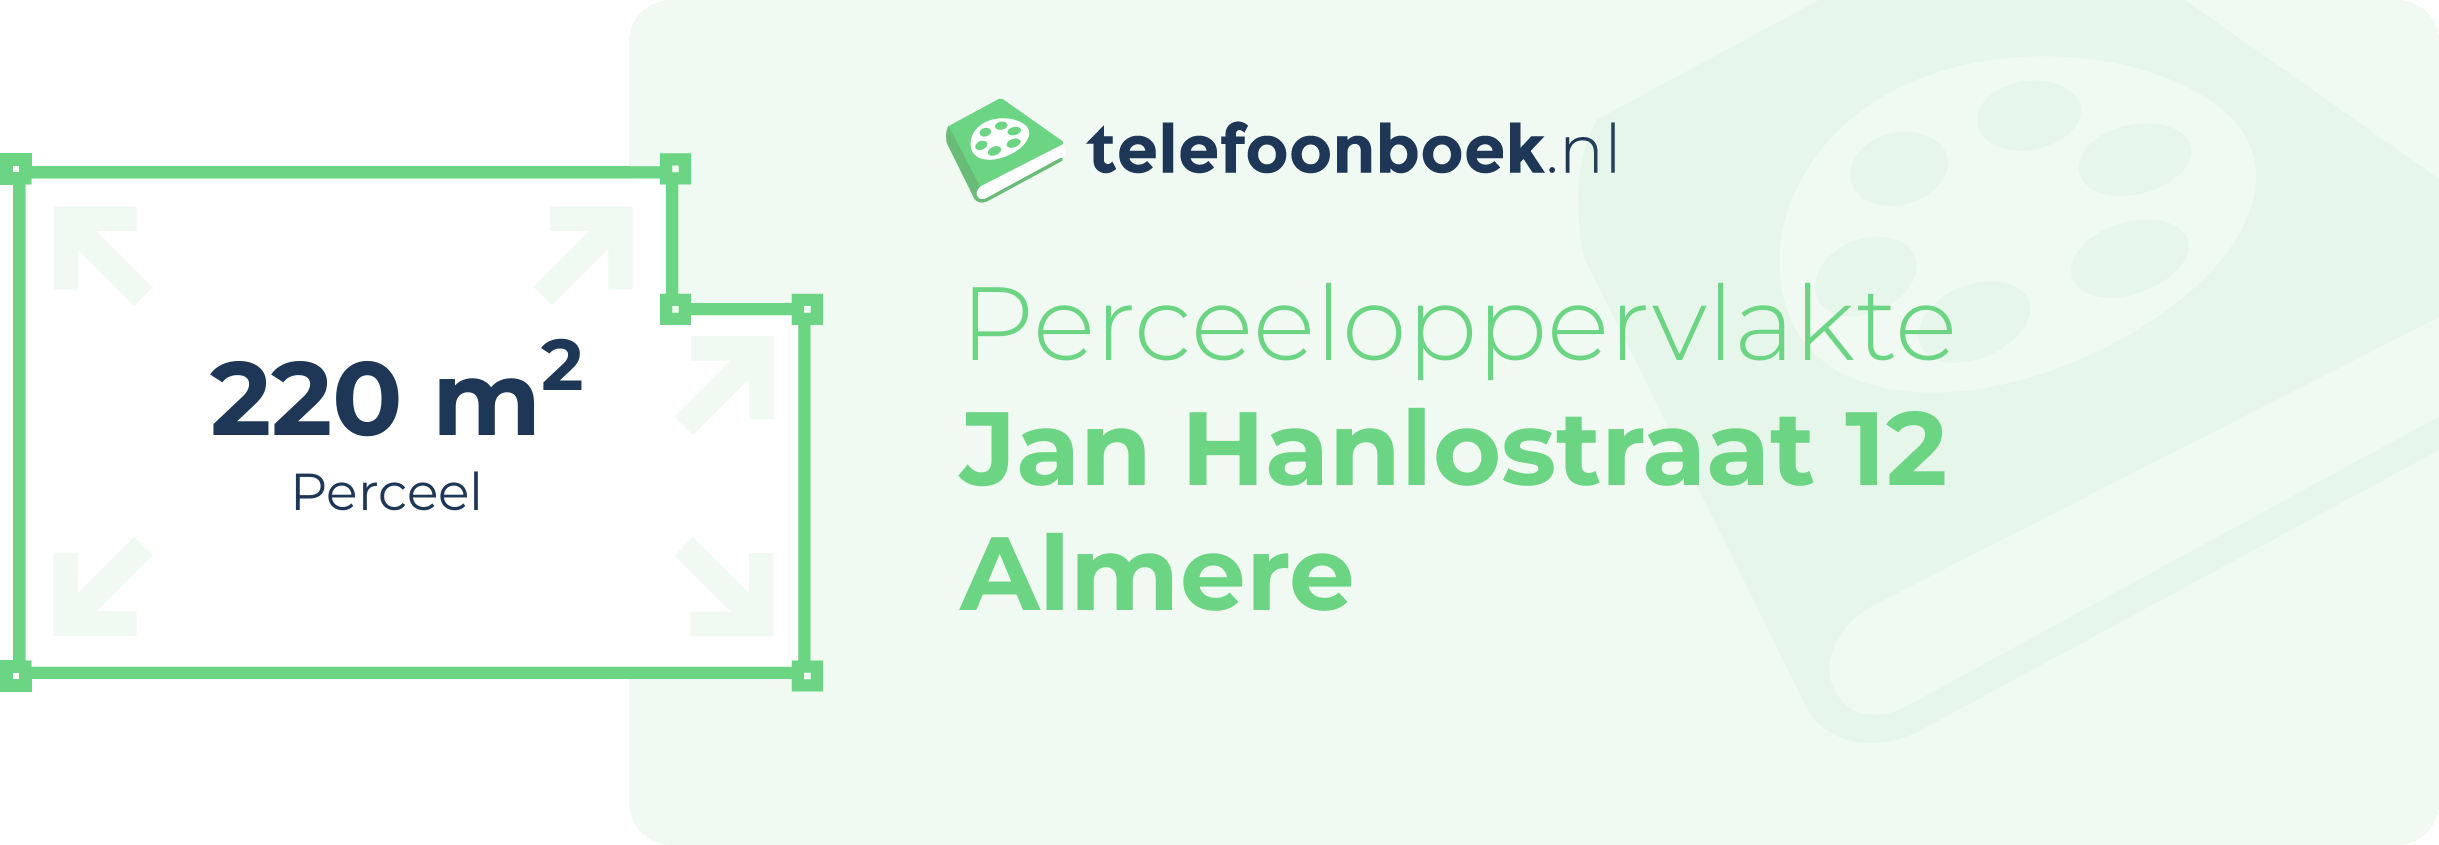 Perceeloppervlakte Jan Hanlostraat 12 Almere